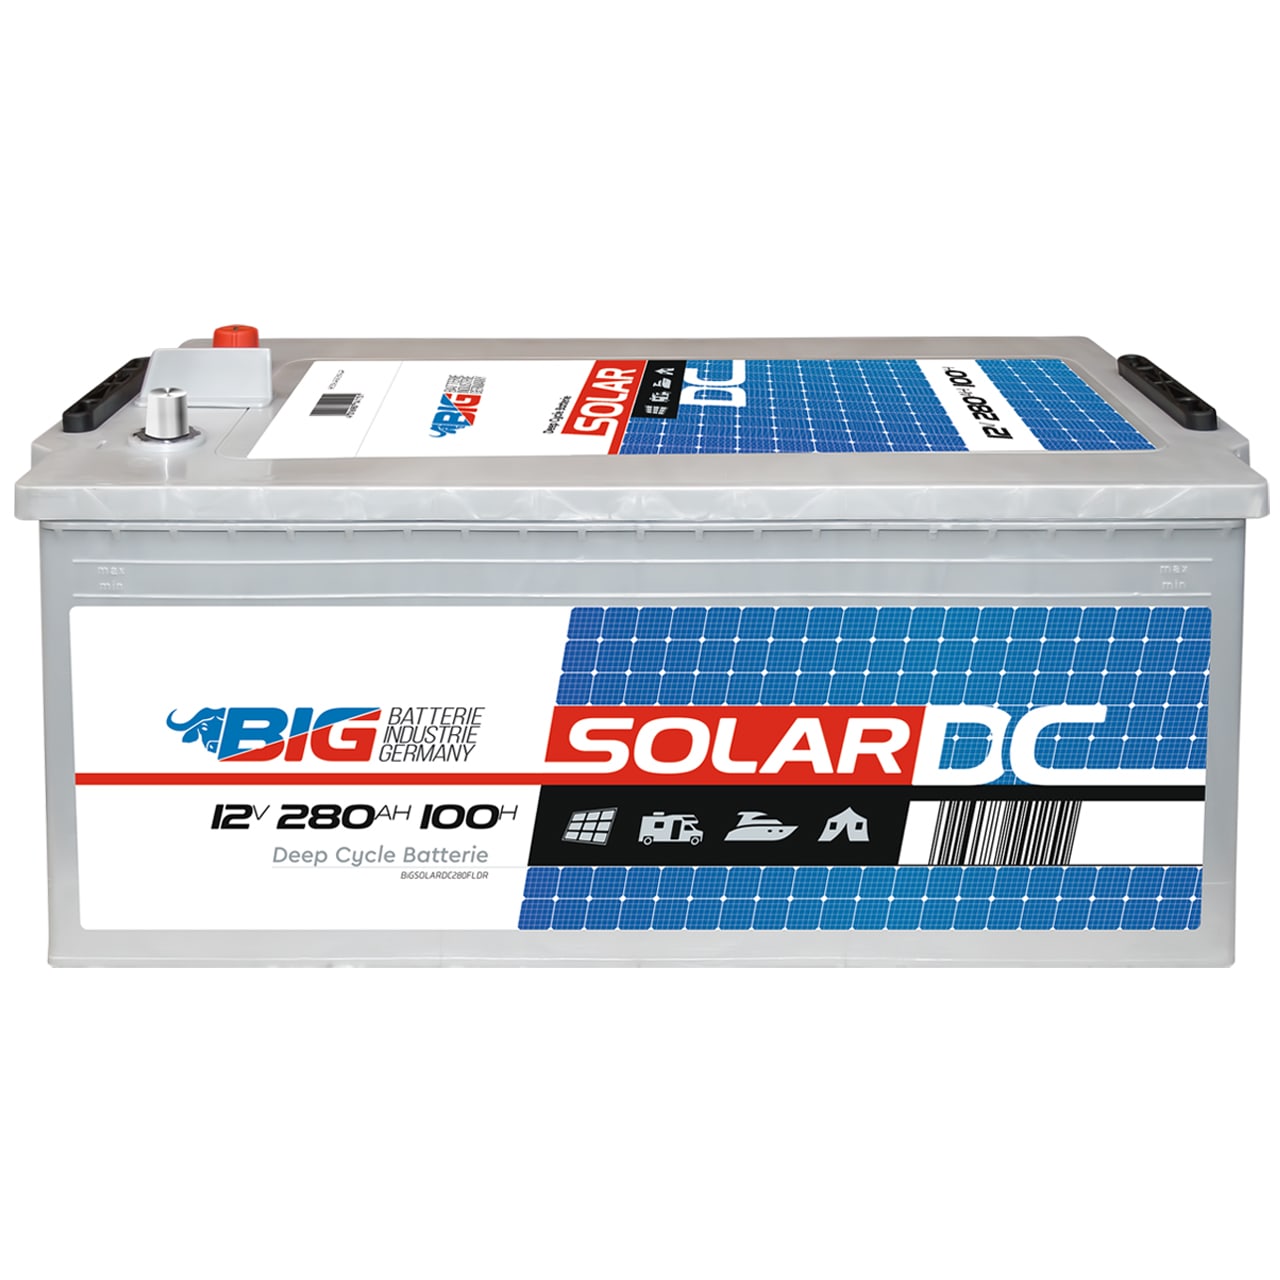 Langzeit Solarbatterie 280Ah 12V, 274,71 €